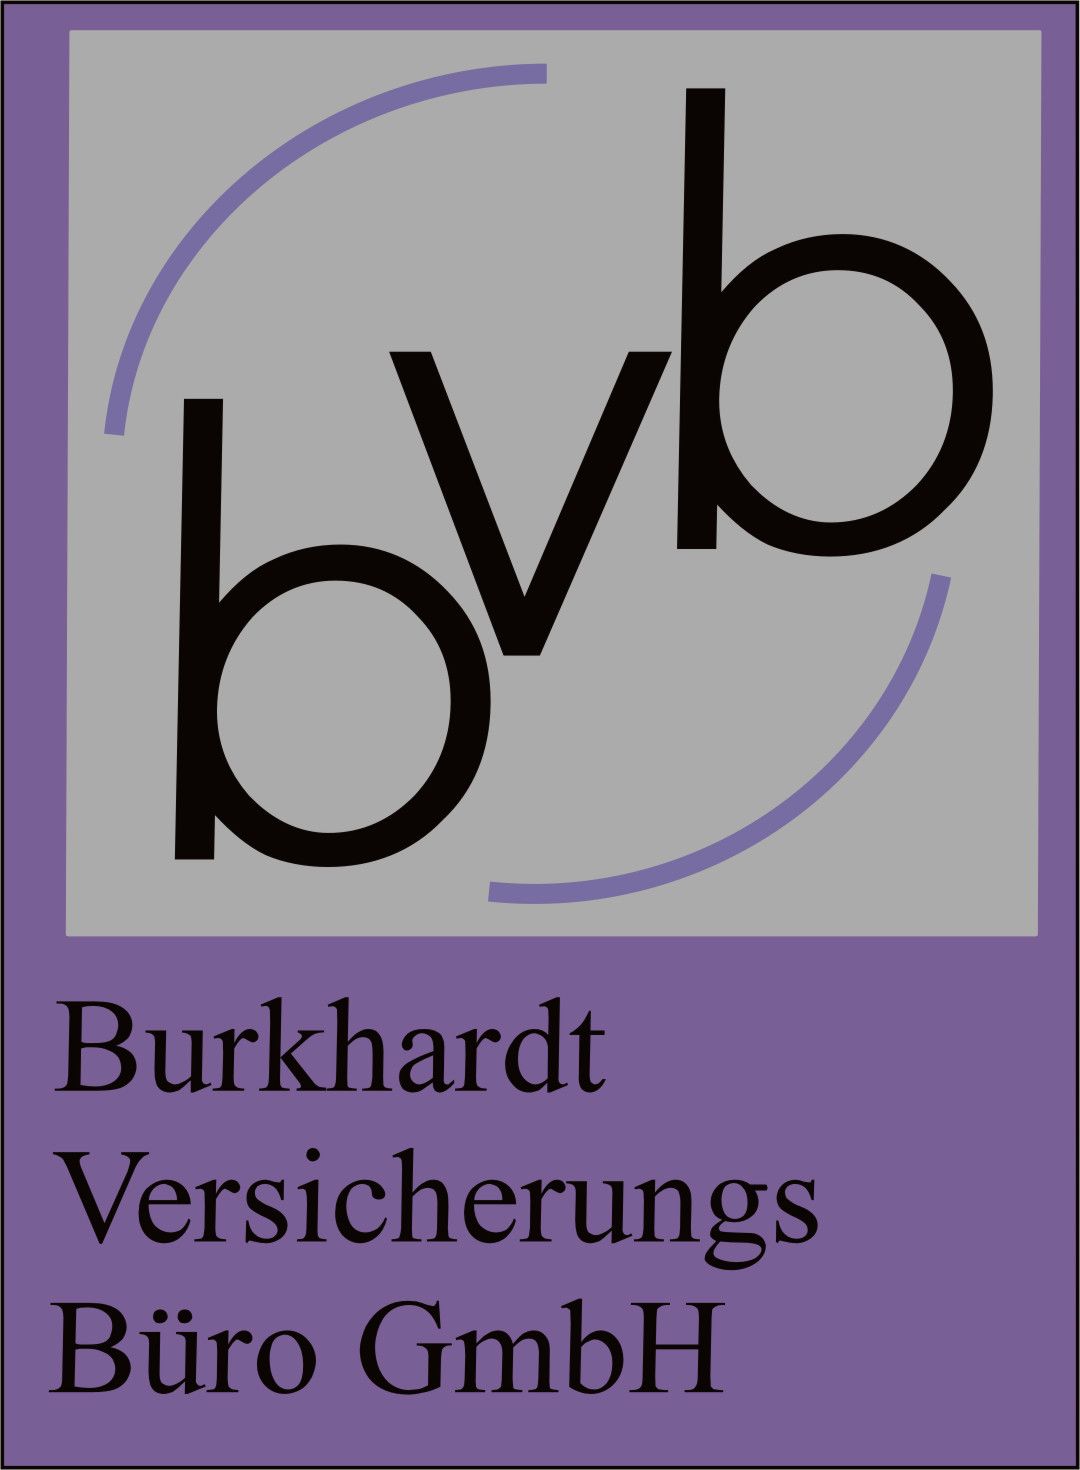 bvb-Burkhardt Versicherungsbuero